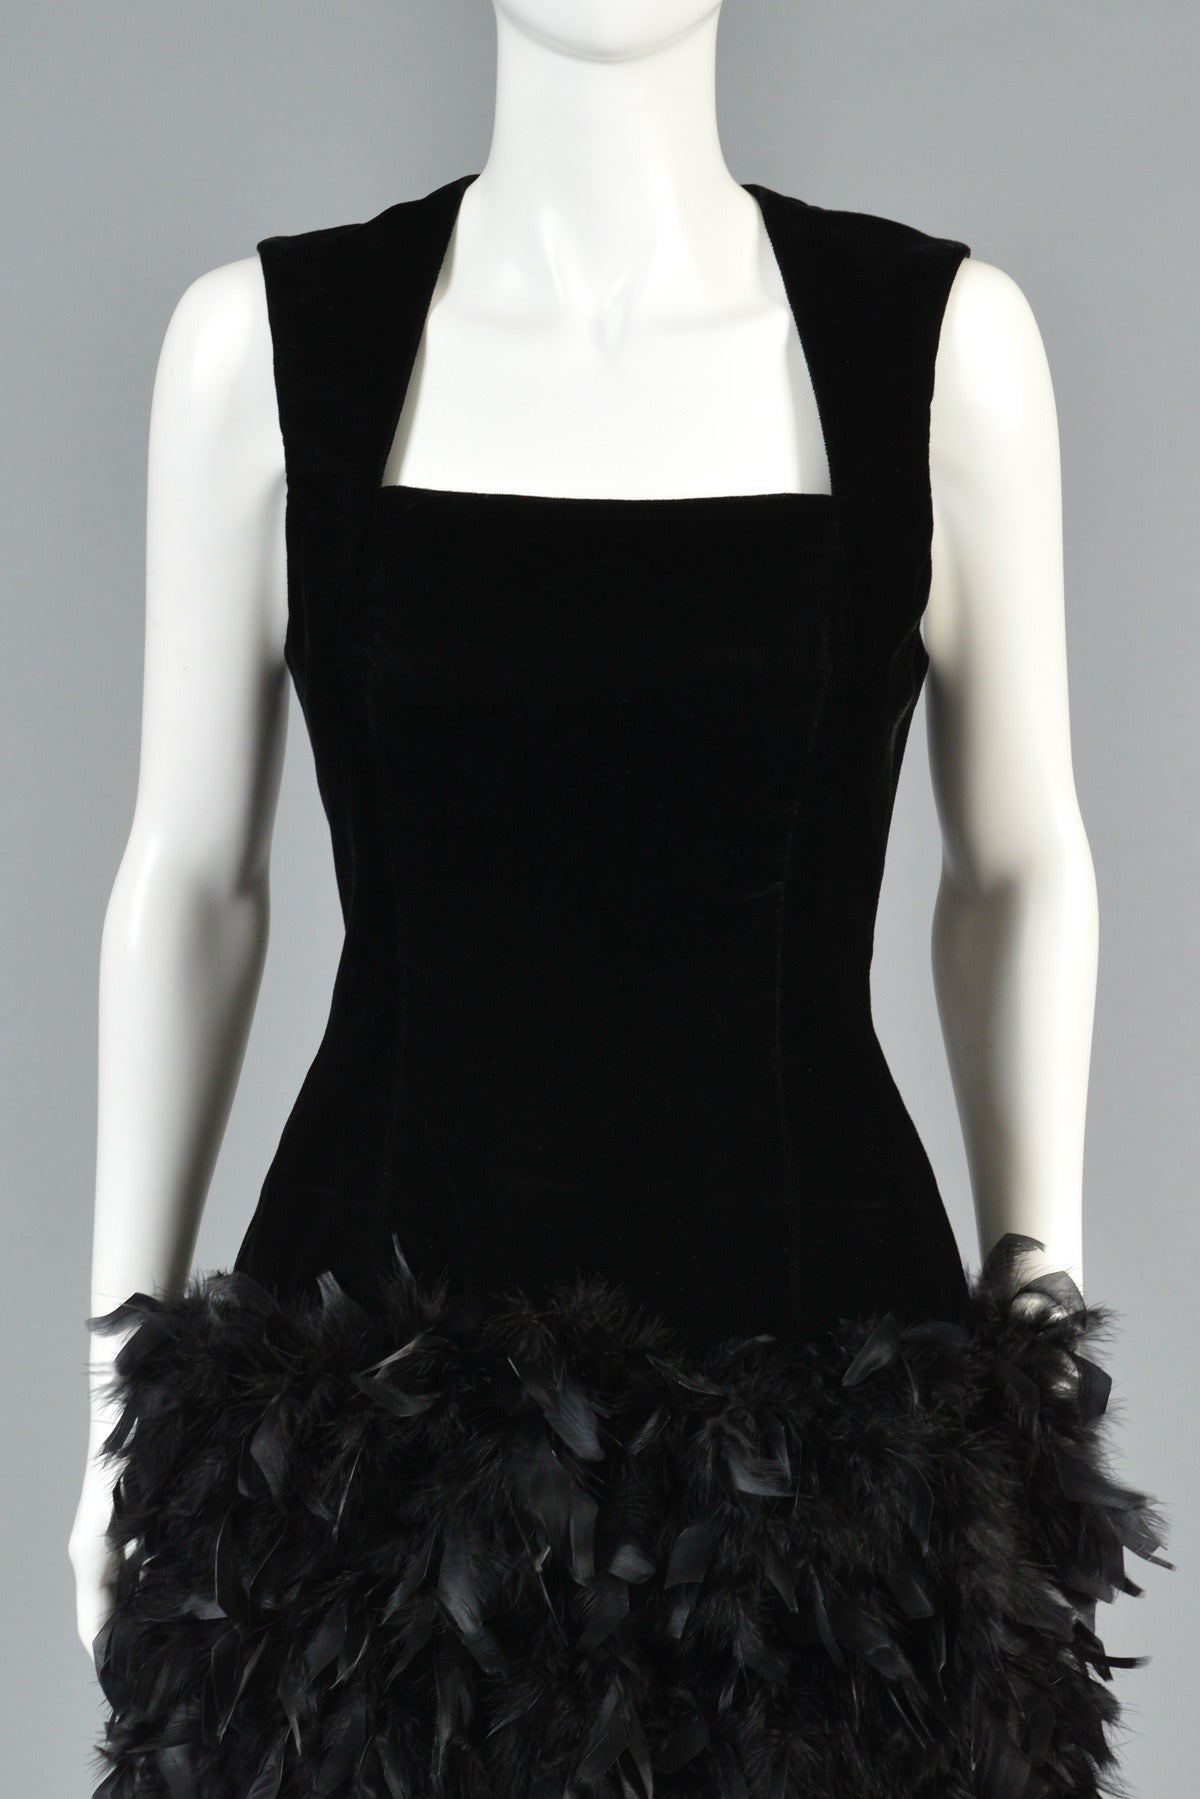 Women's Black Velvet Cocktail Dress with Feathered Skirt For Sale